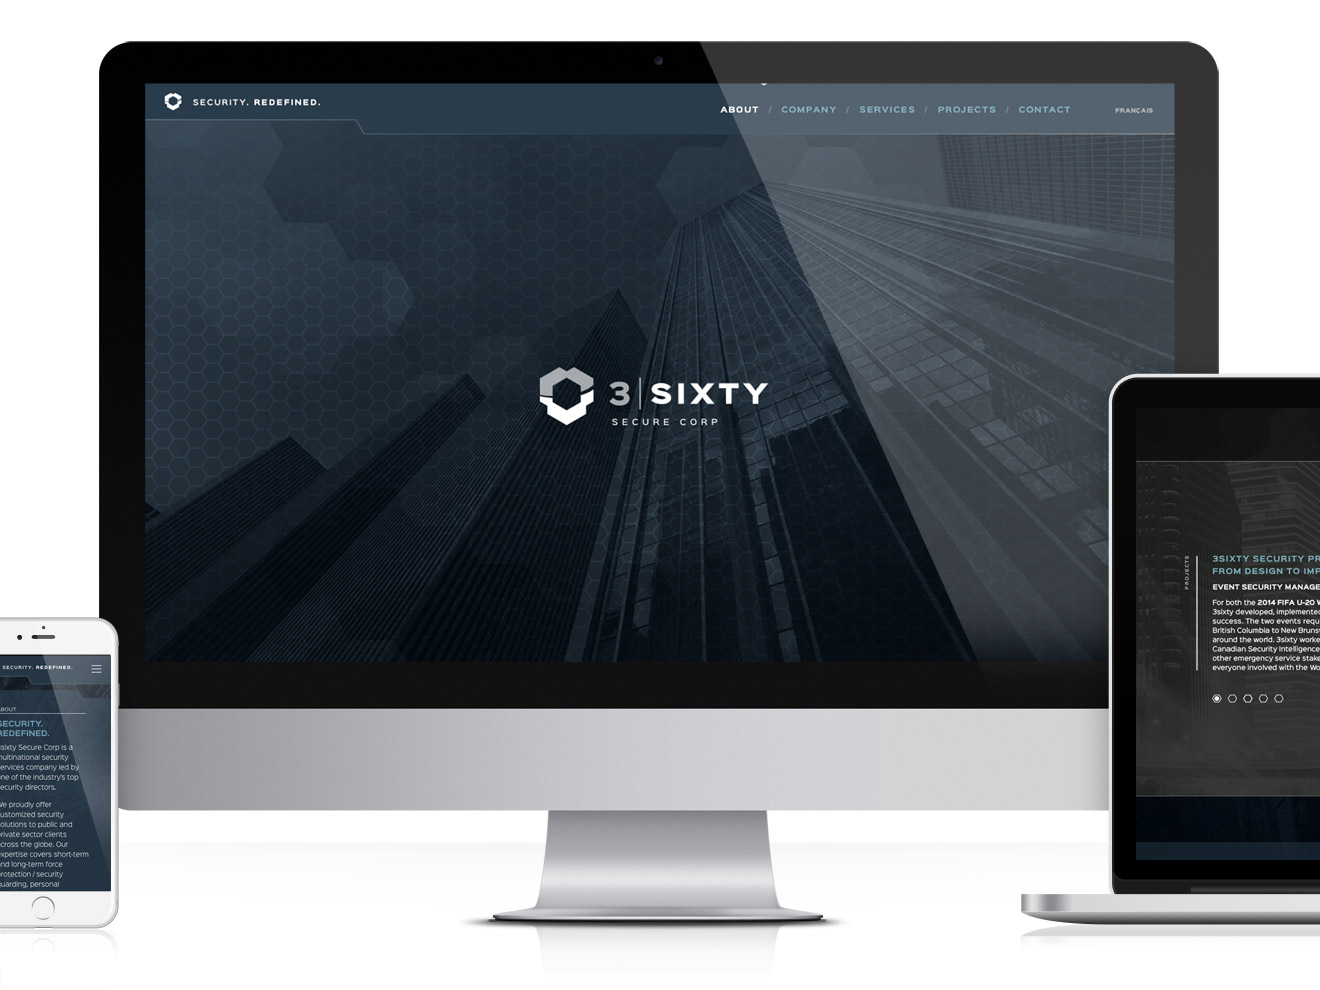 3 Sixty website, multi-media responsiveness